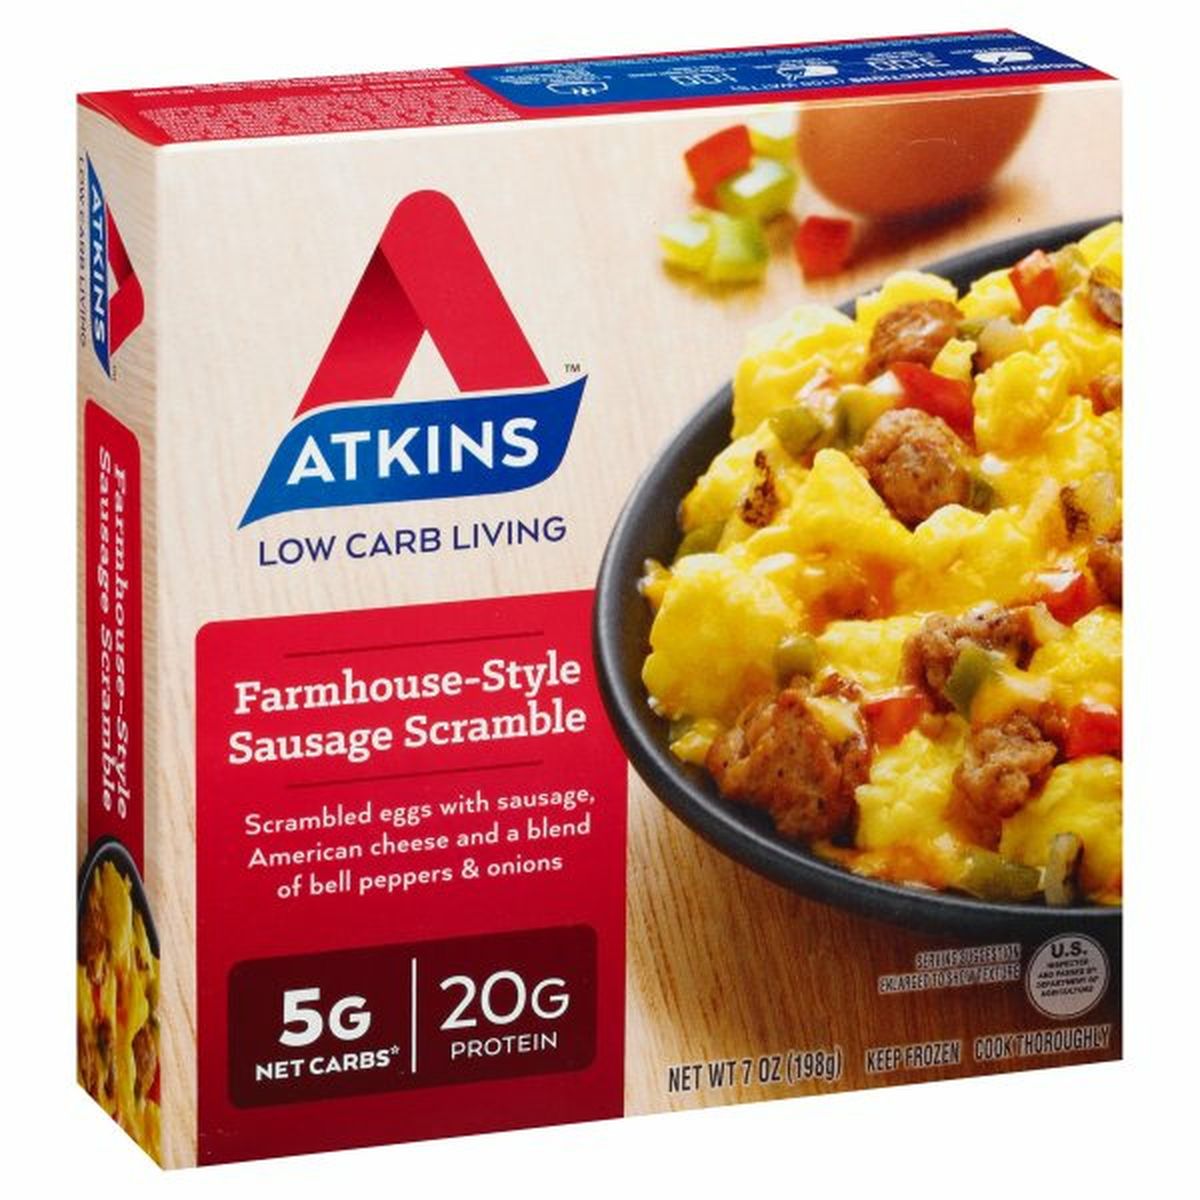 Calories in Atkins Sausage Scramble, Farmhouse-Style